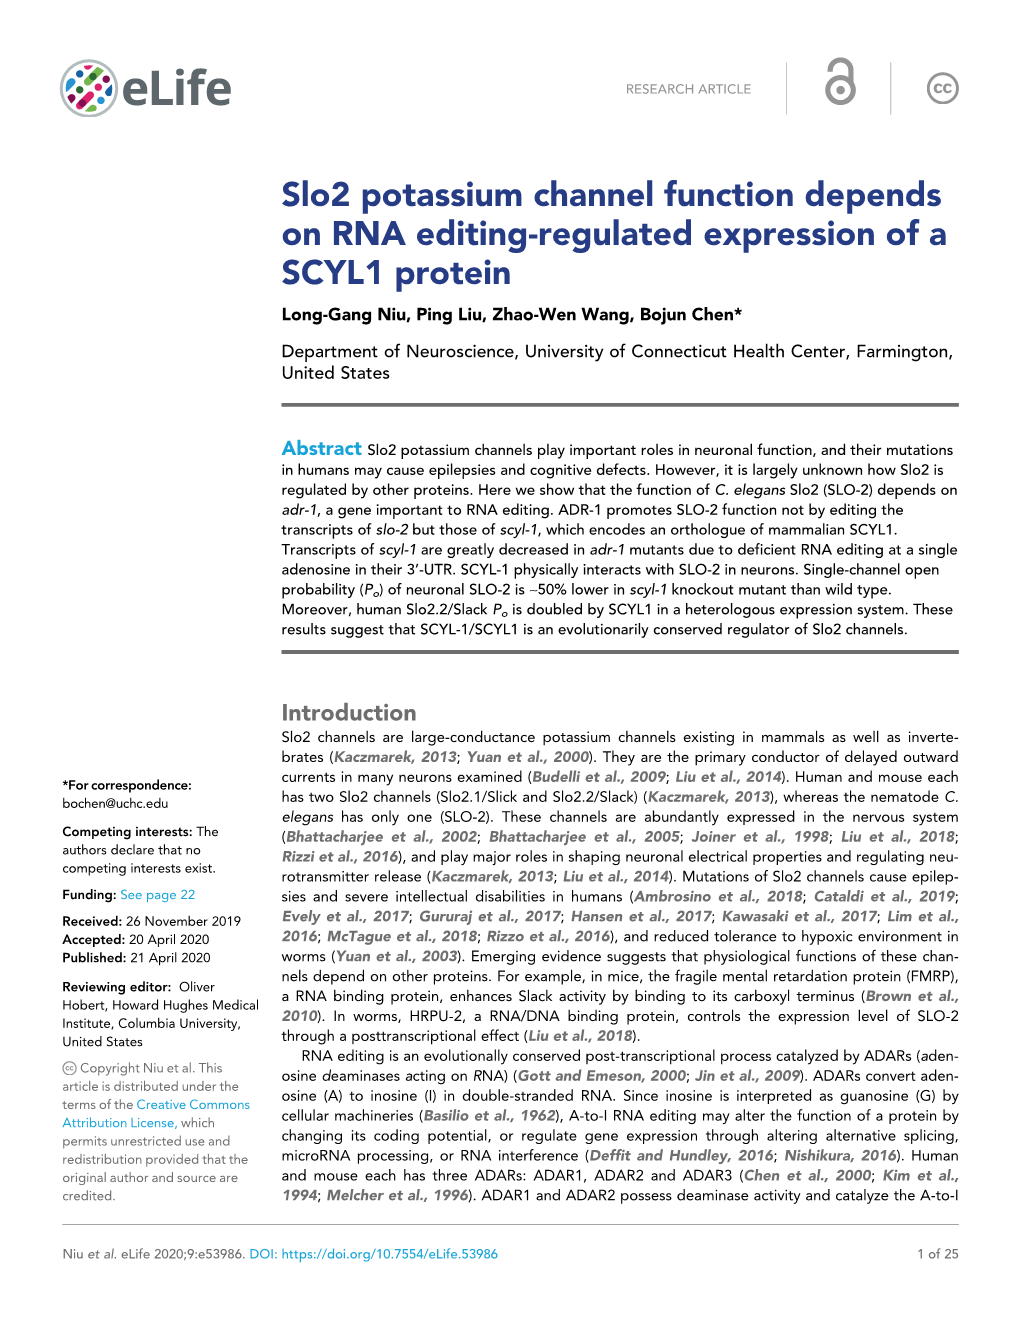 Slo2 Potassium Channel Function Depends on RNA Editing-Regulated Expression of a SCYL1 Protein Long-Gang Niu, Ping Liu, Zhao-Wen Wang, Bojun Chen*